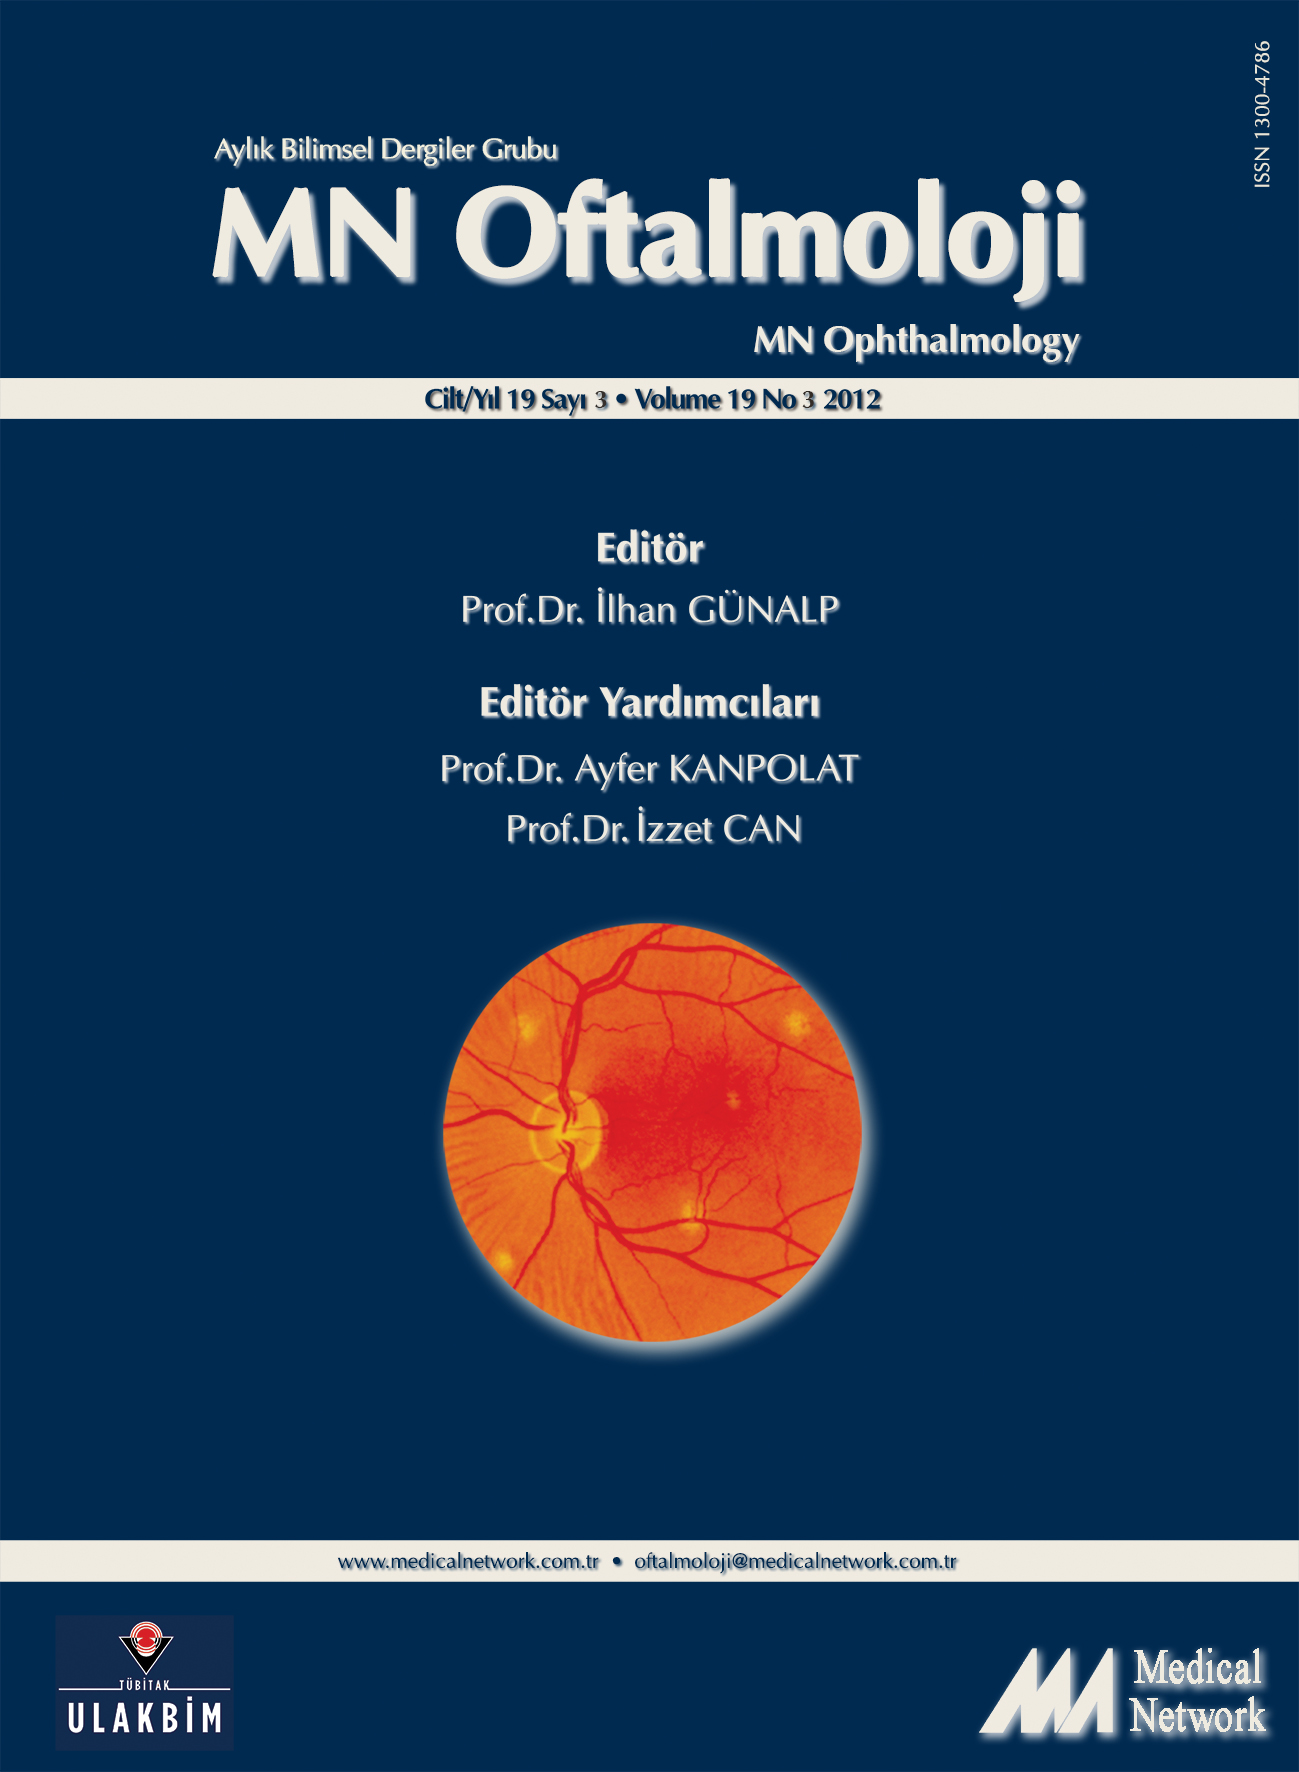 <p>MN Oftalmoloji Cilt: 19 Sayı: 3 2012 (MN Ophthalmology Volume: 19 No 3 2012)</p>